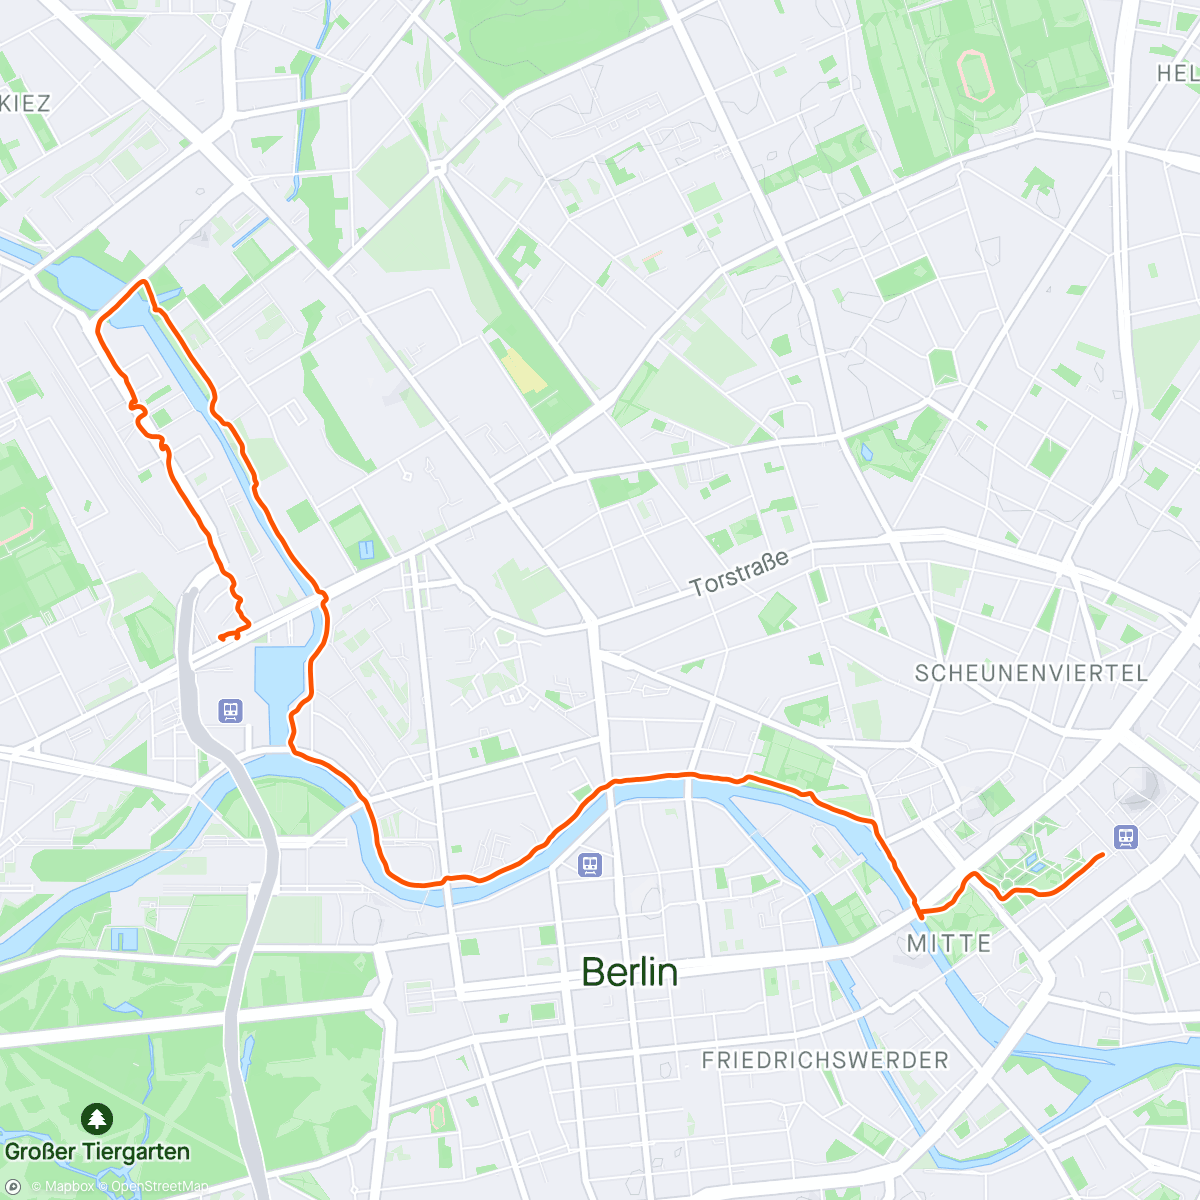 「Last walk in Berlin」活動的地圖